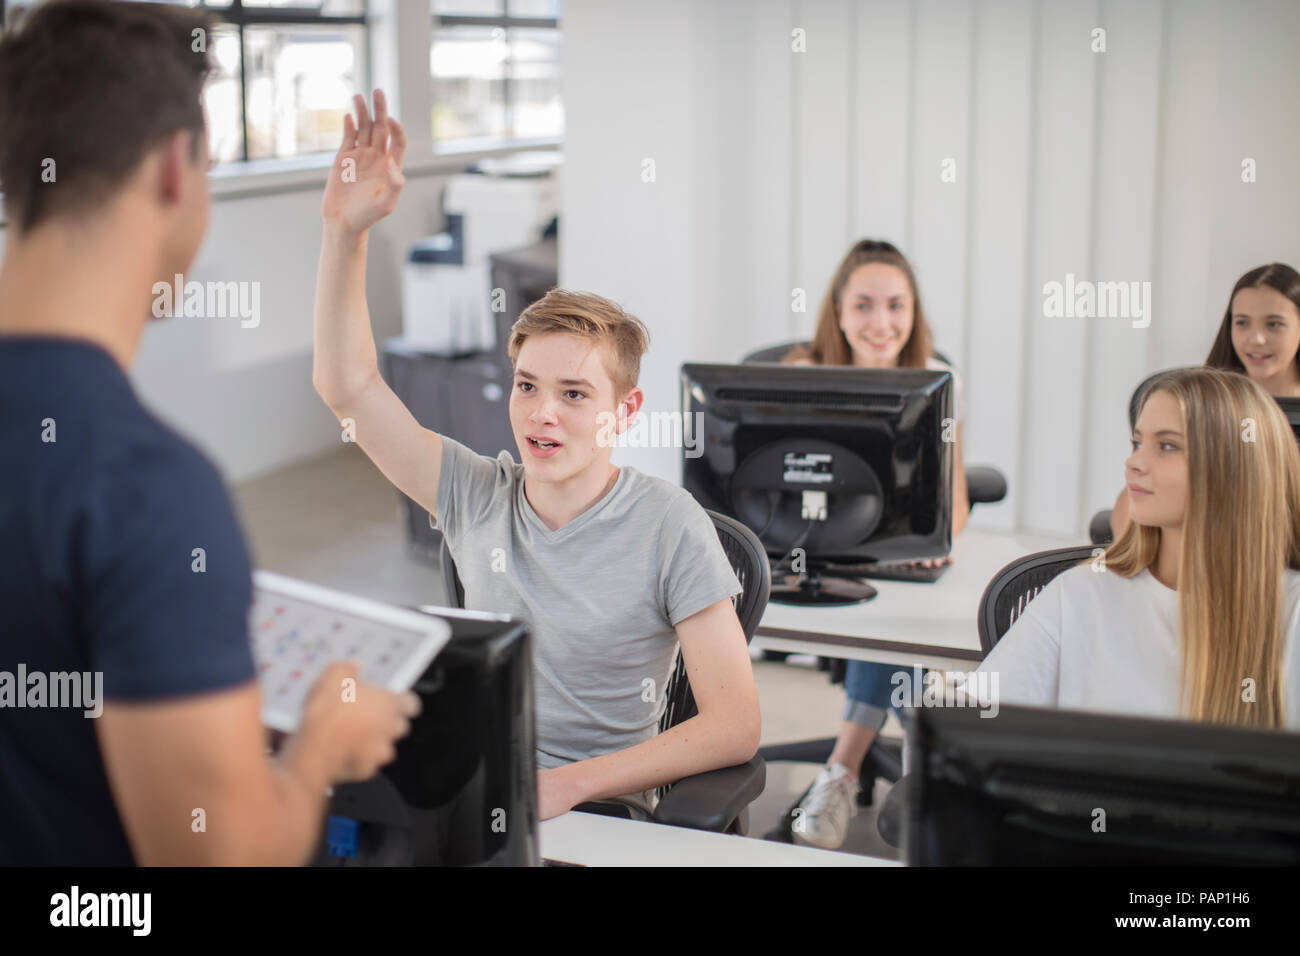 Boy raising hand in computer class Stock Photo